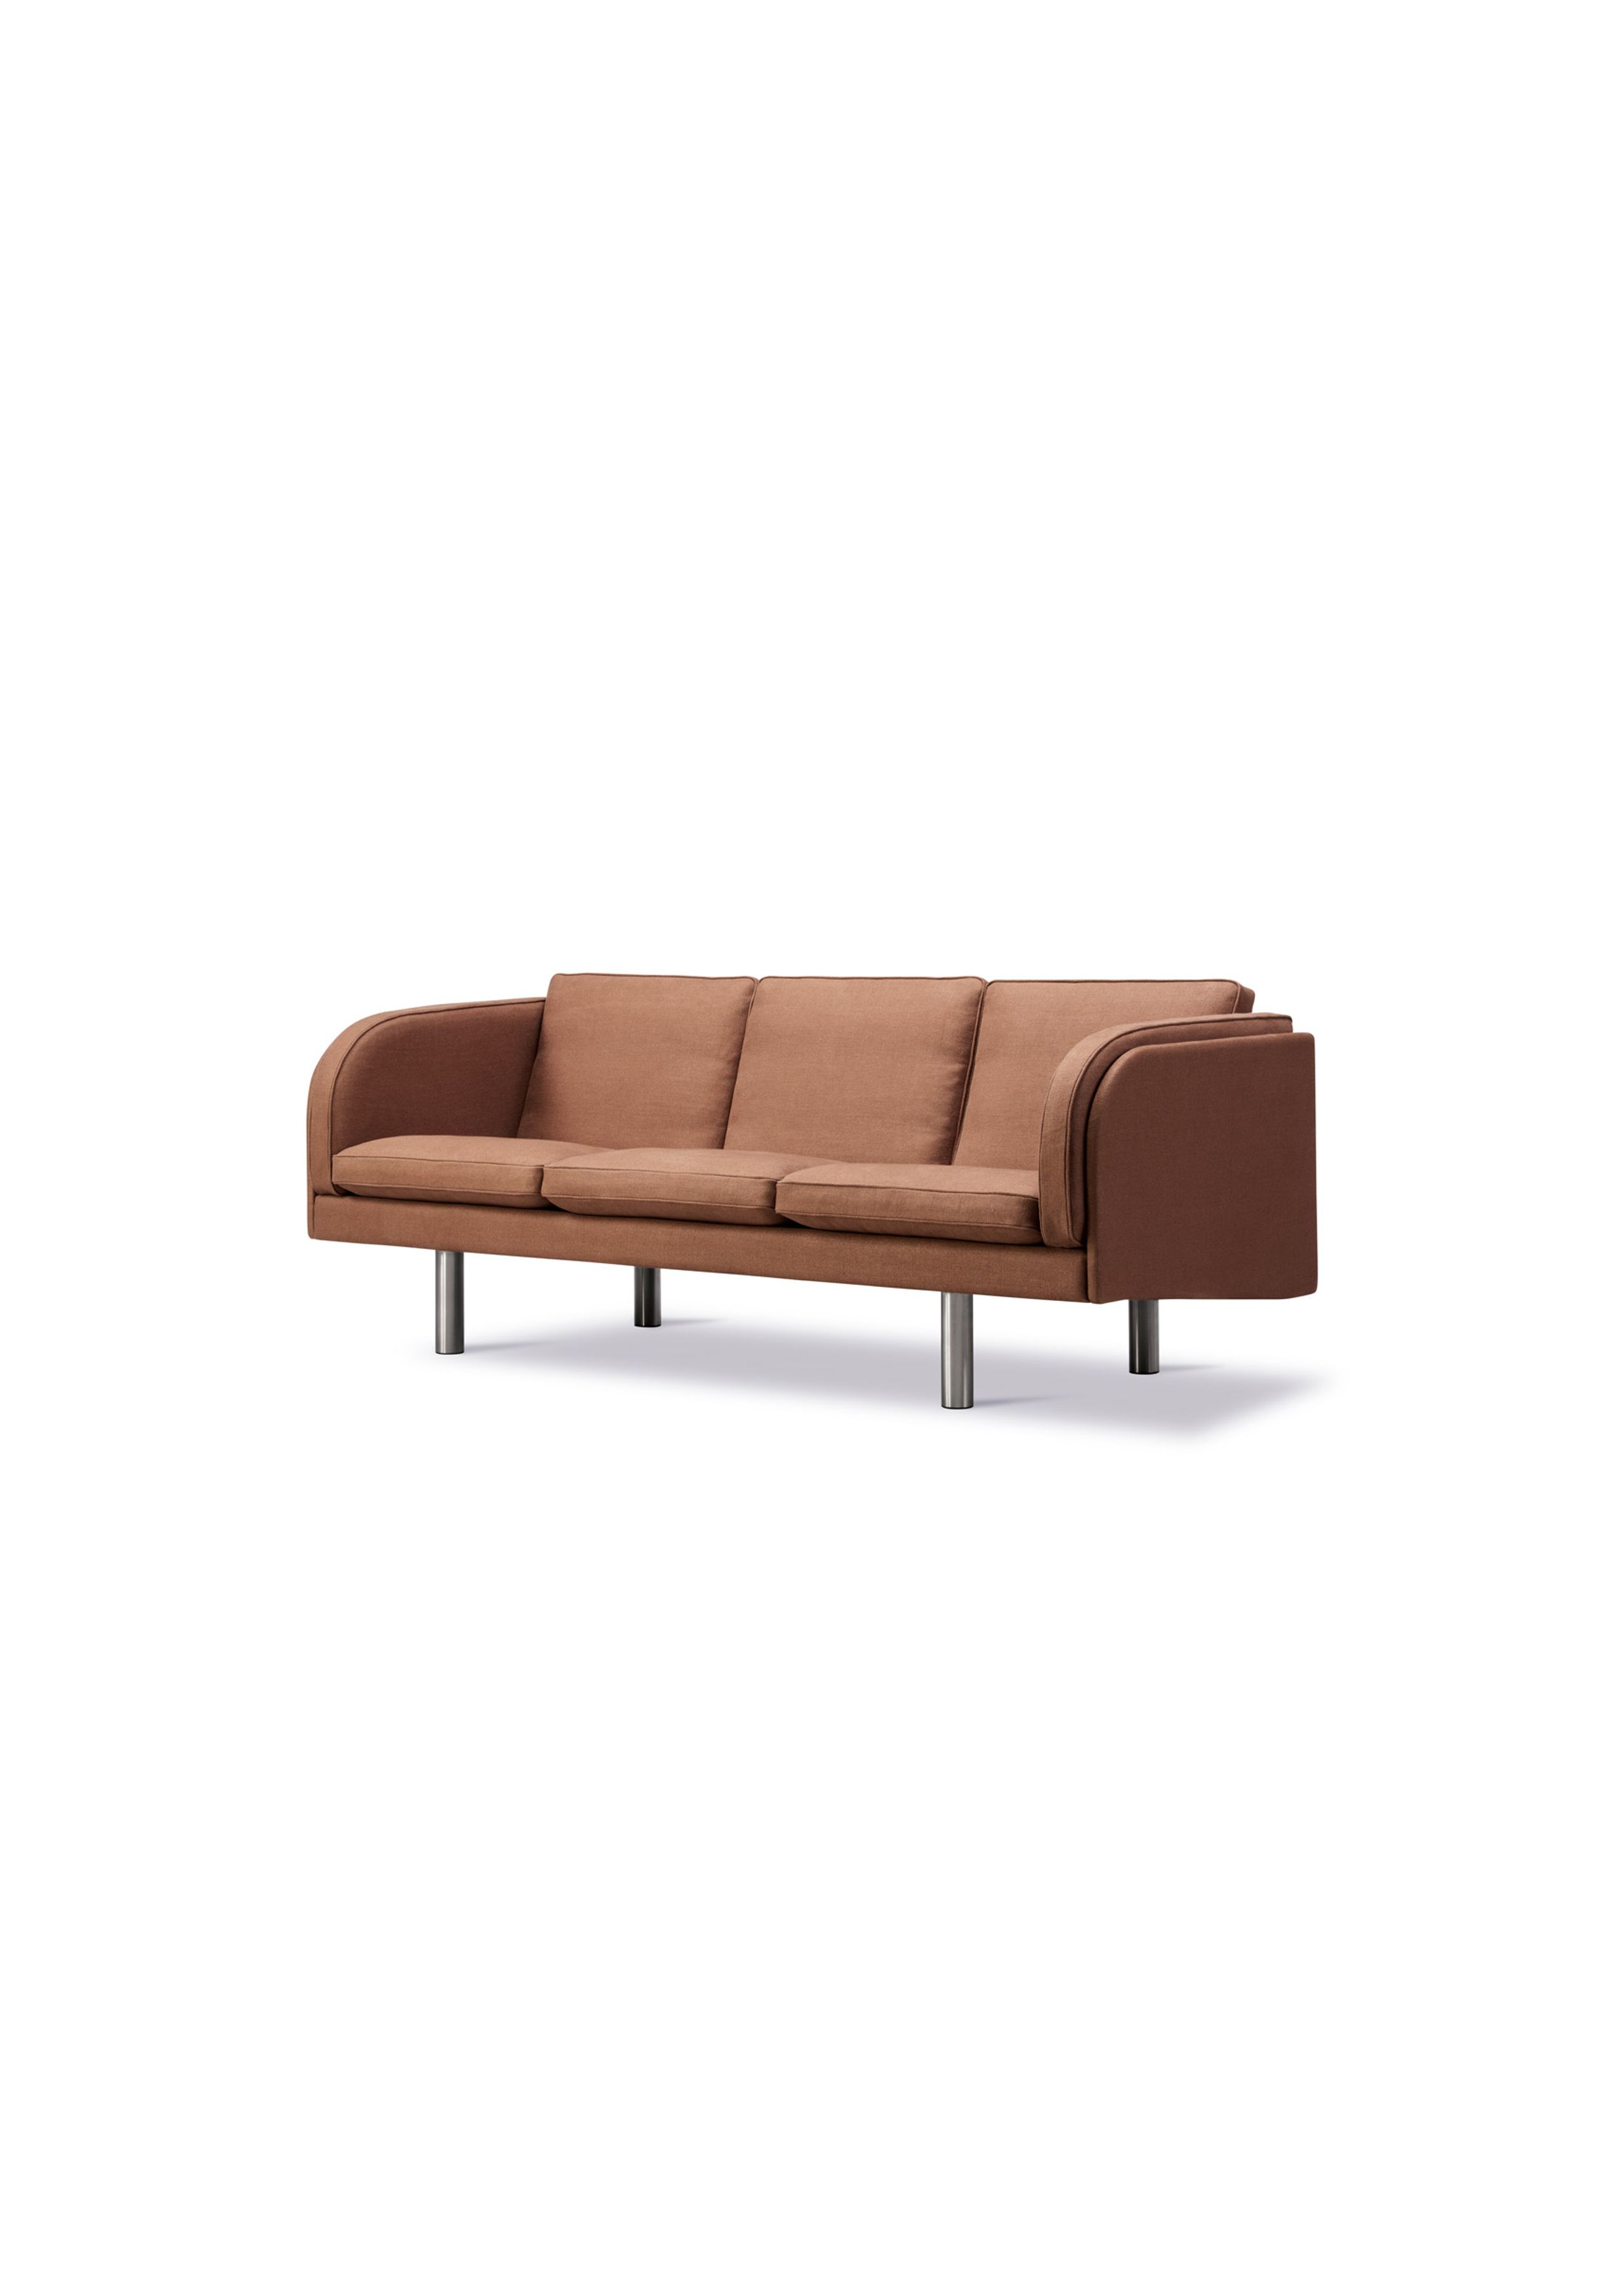 Fredericia Furniture - 3-Personen-Sofa - JG Sofa 6523 by Jørgen Gammelgaard - Grand Linen 4803 / Brushed Stainless Steel